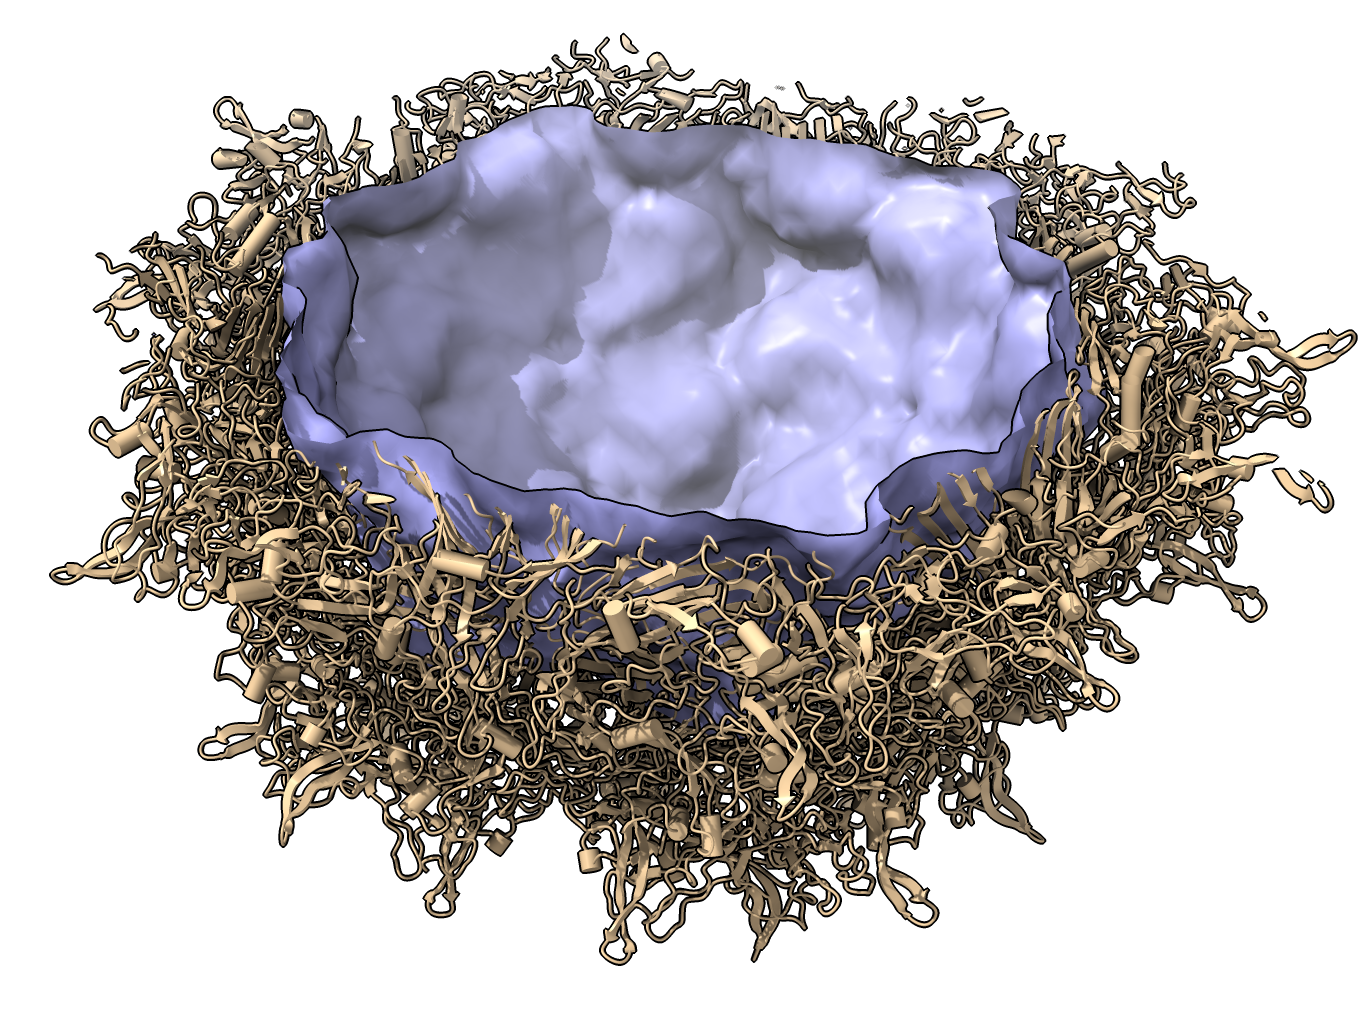 Adeno-associated virus interior